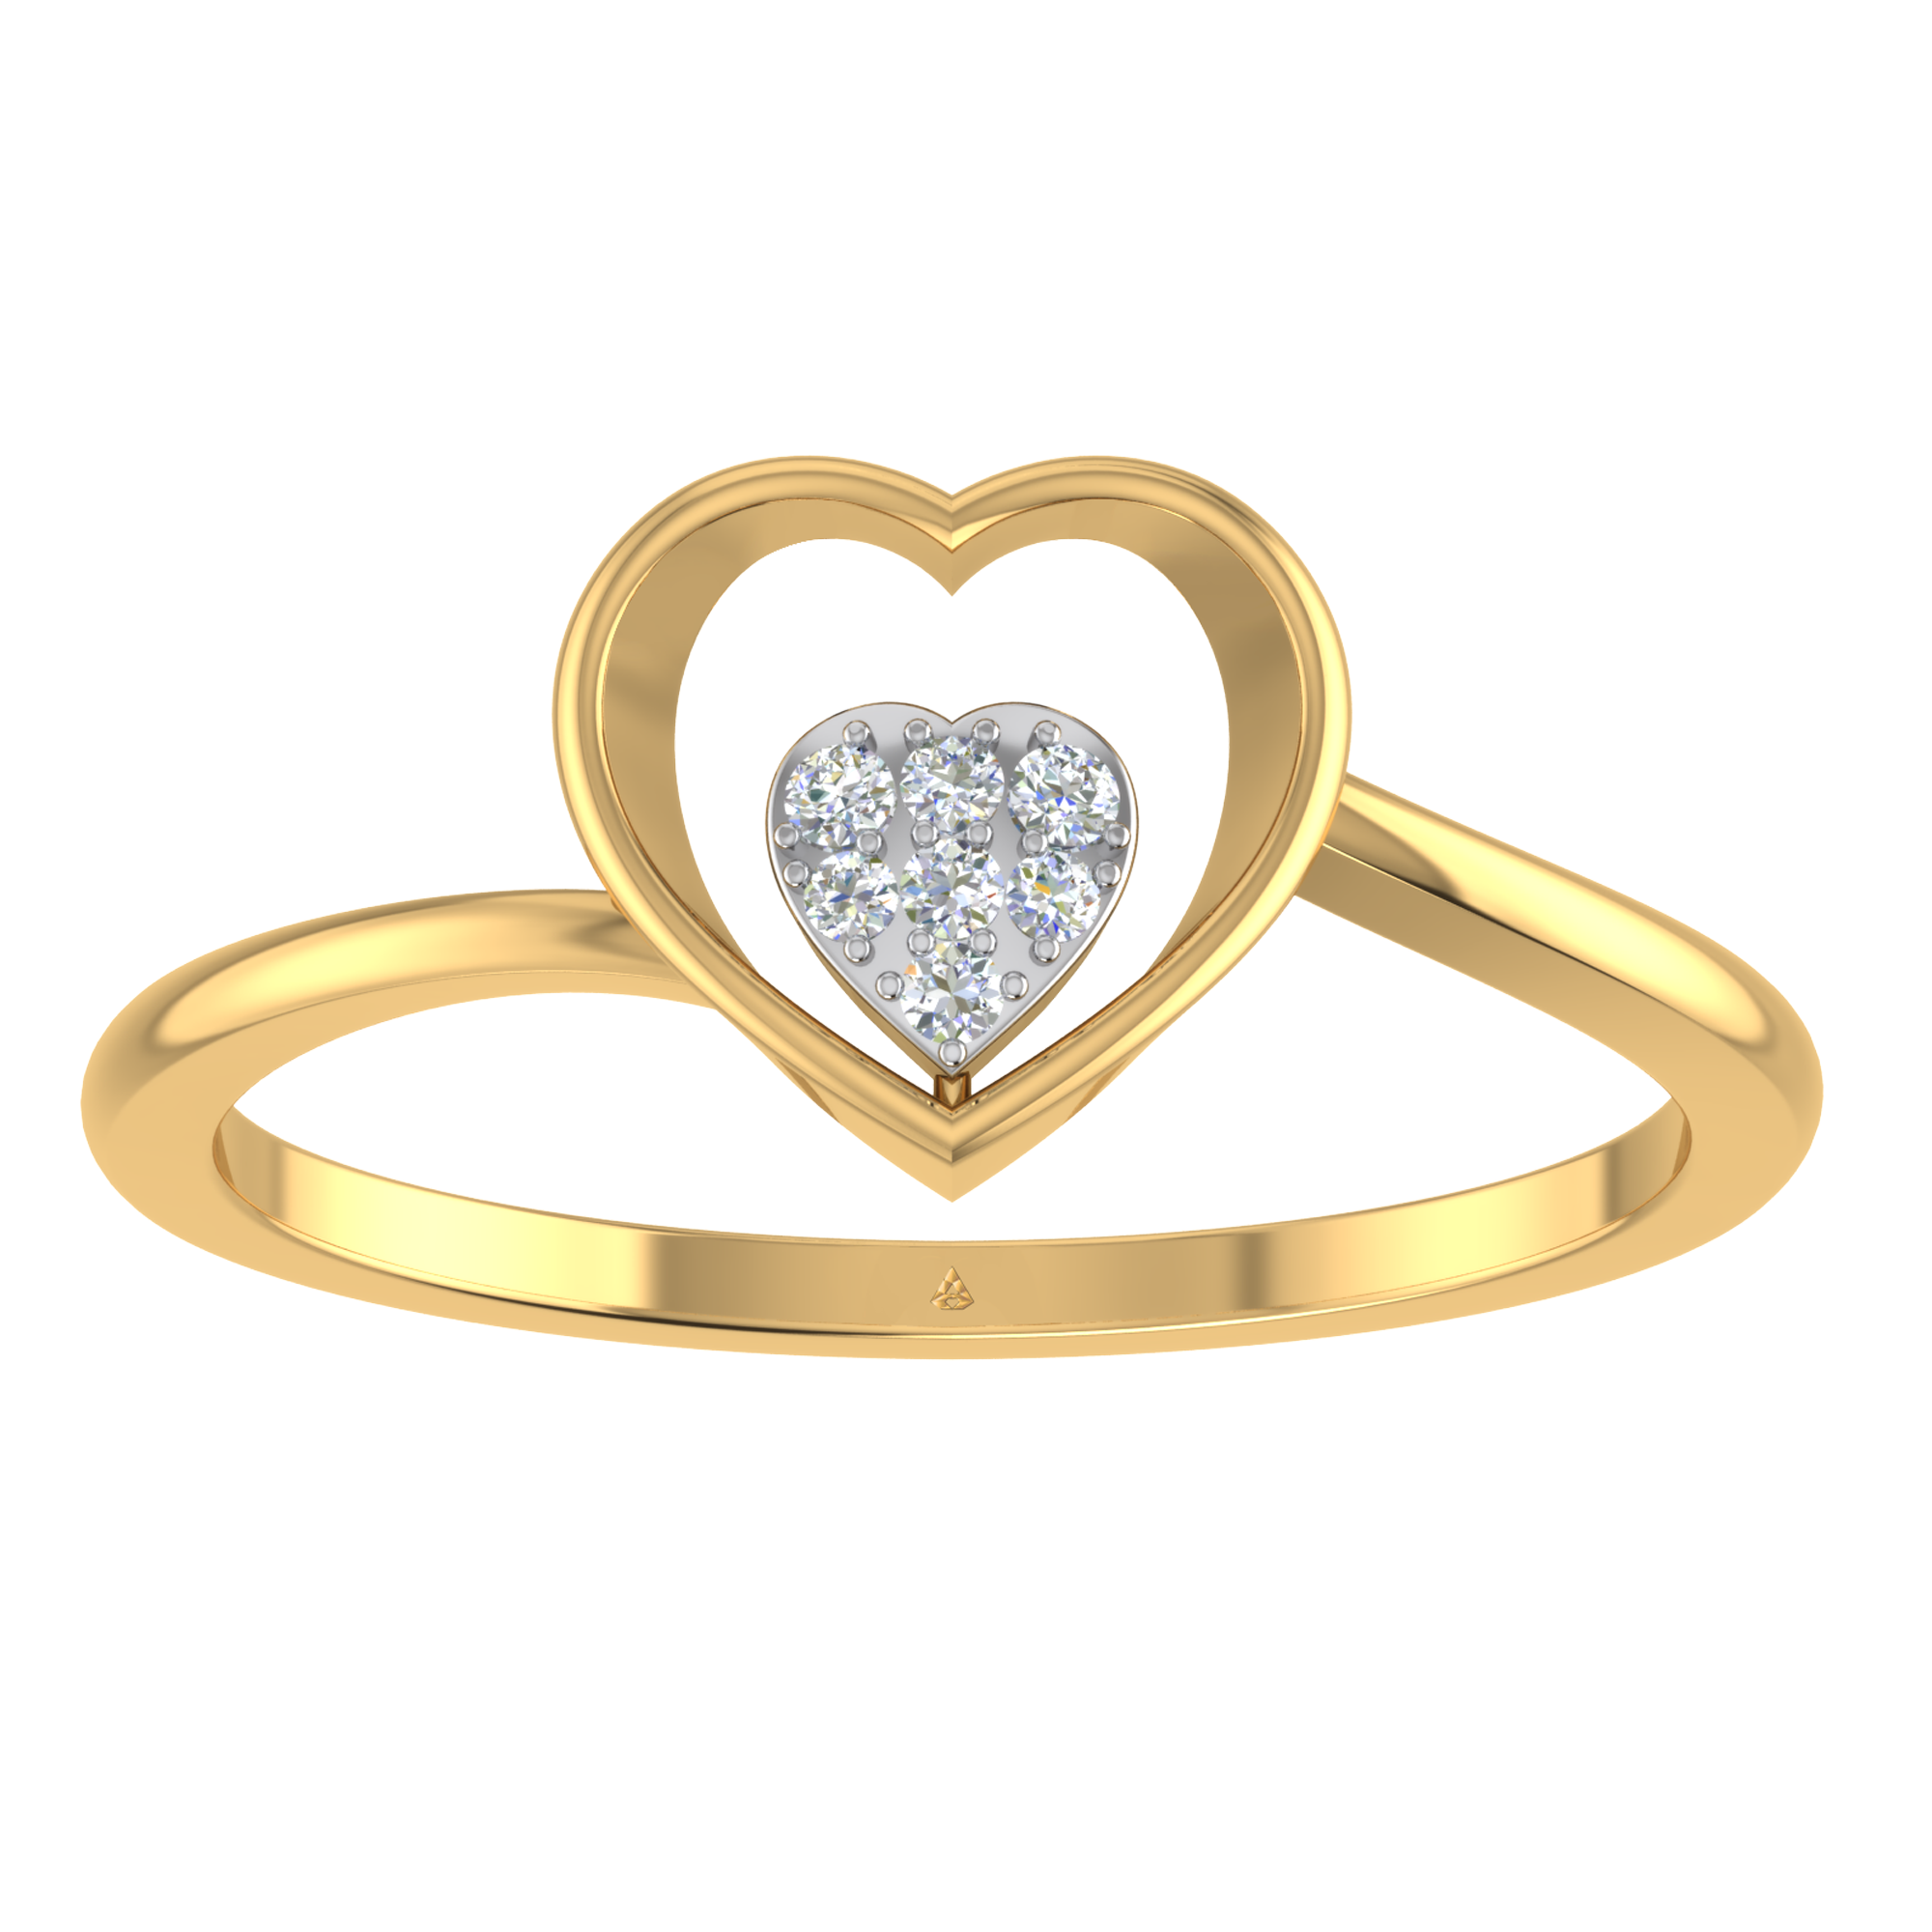 Yellow Gold Two Heart Ring Latest New Trendy Girls Valentine Love Gift  Jewelry | eBay